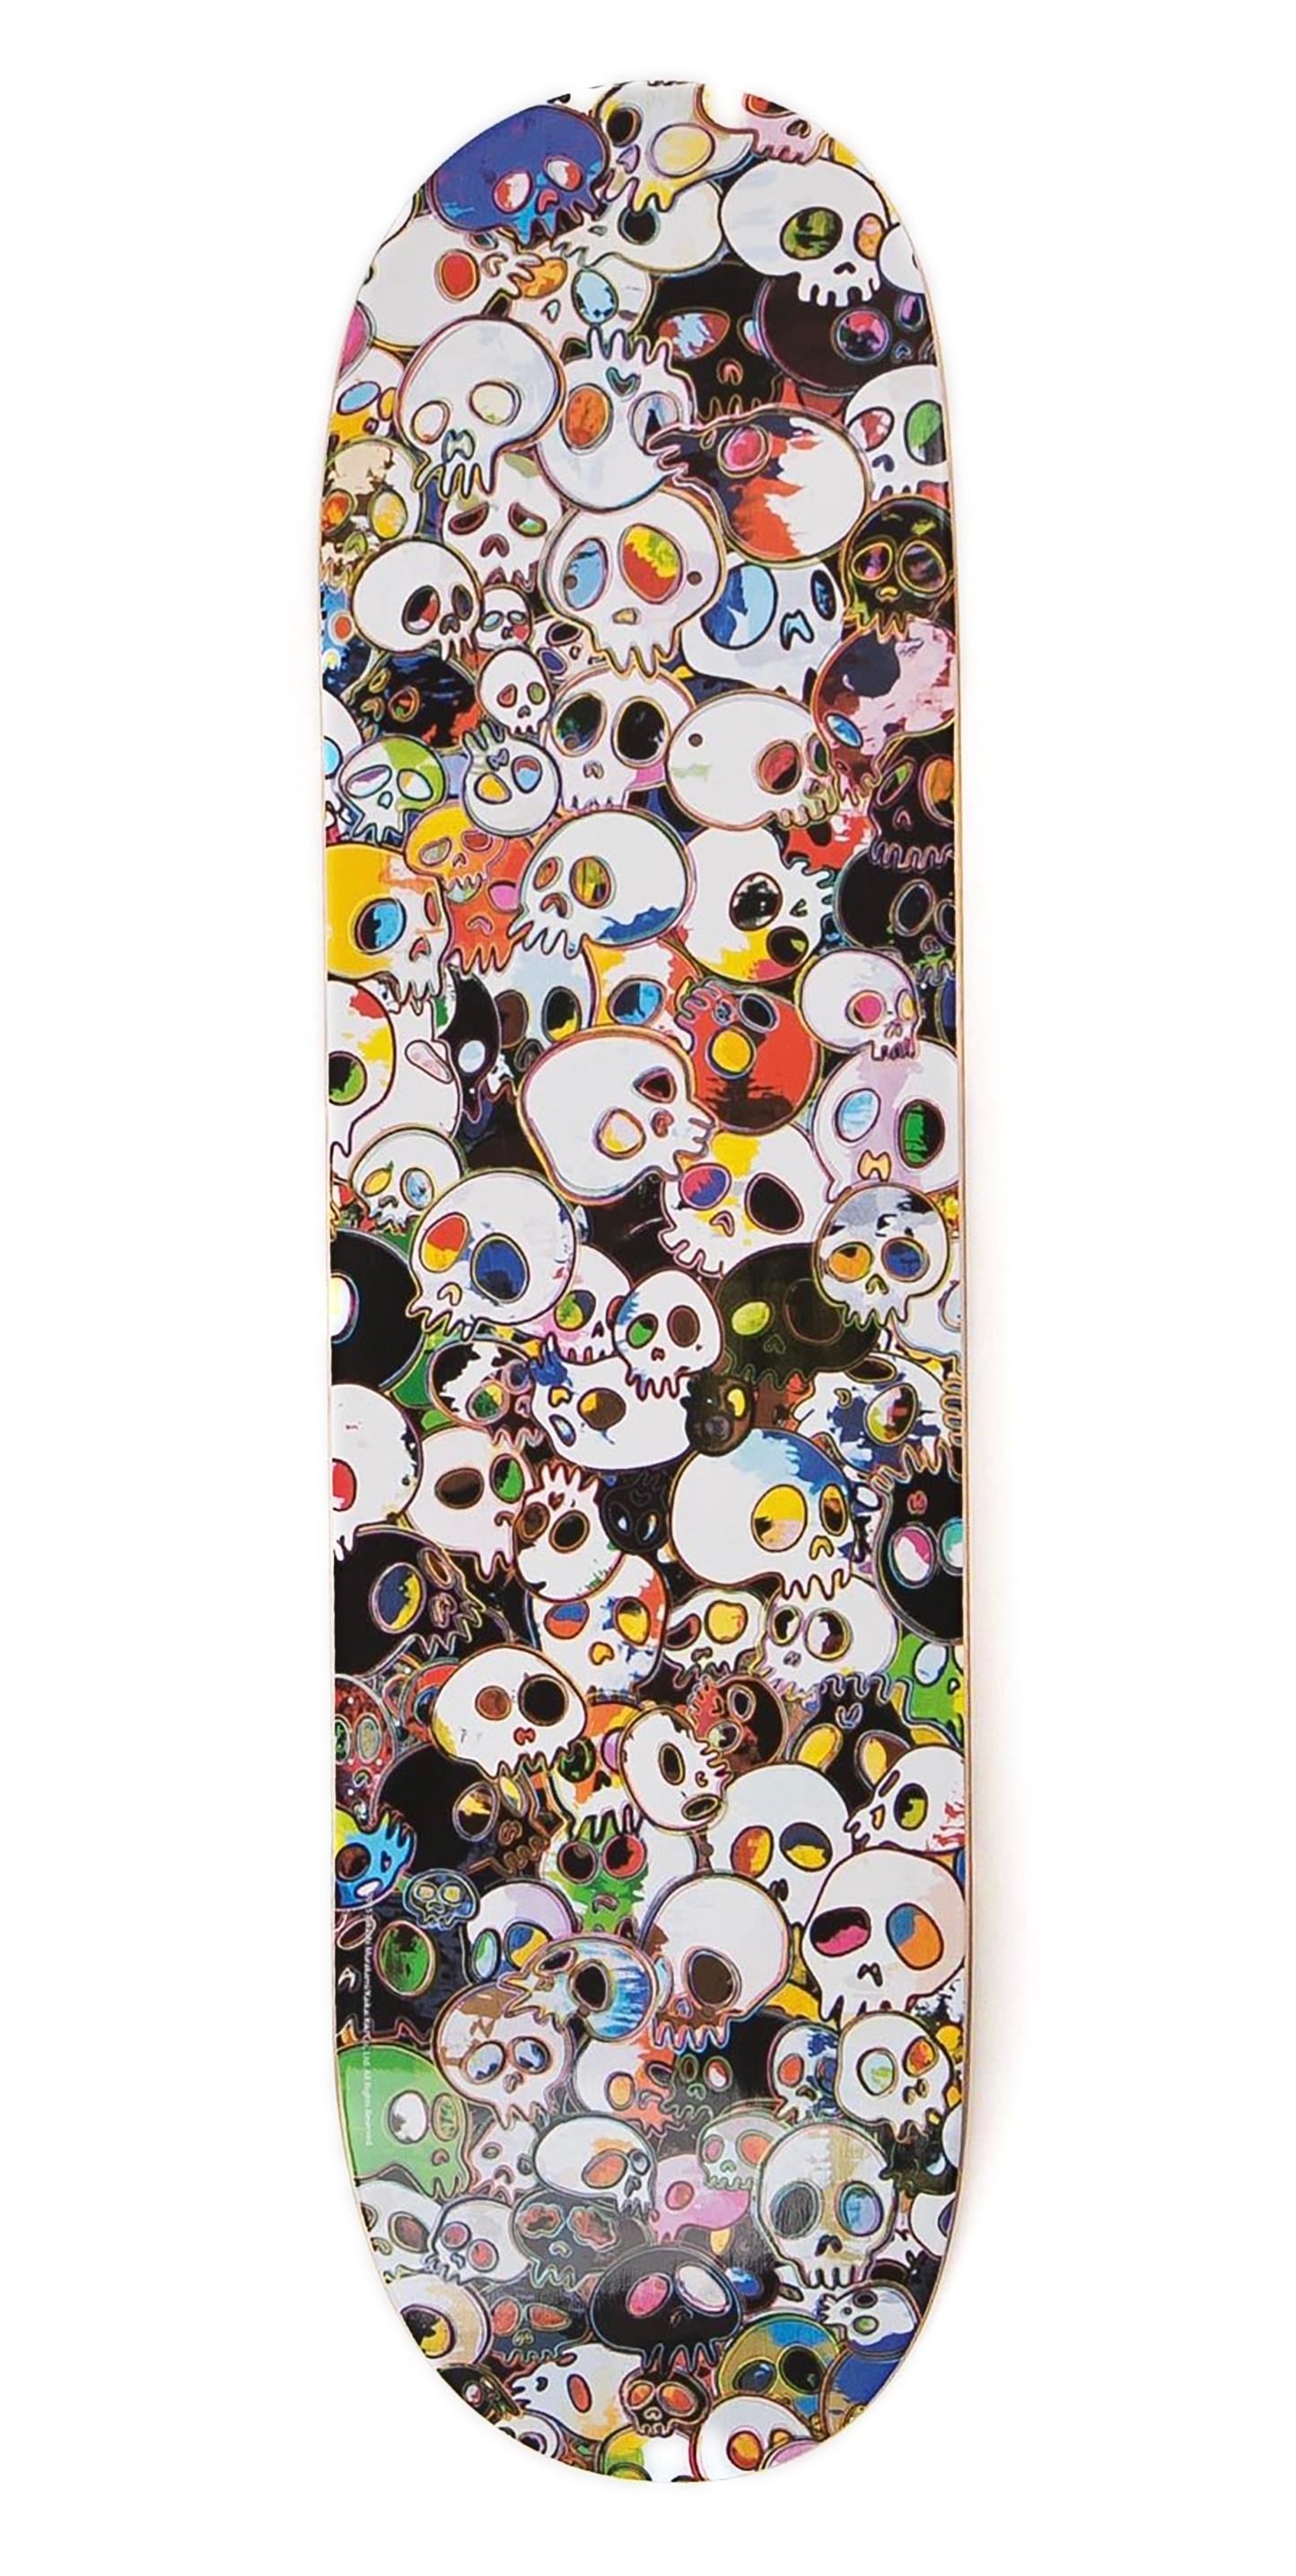 Takashi Murakami Skulls Skateboard Deck  2015:
A vibrant, unique piece of Takashi Murakami  skulls wall-art - this highly collectible limited edition Murakami skateboard was published in 2015 as part of a collaboration between Takashi Murakami &